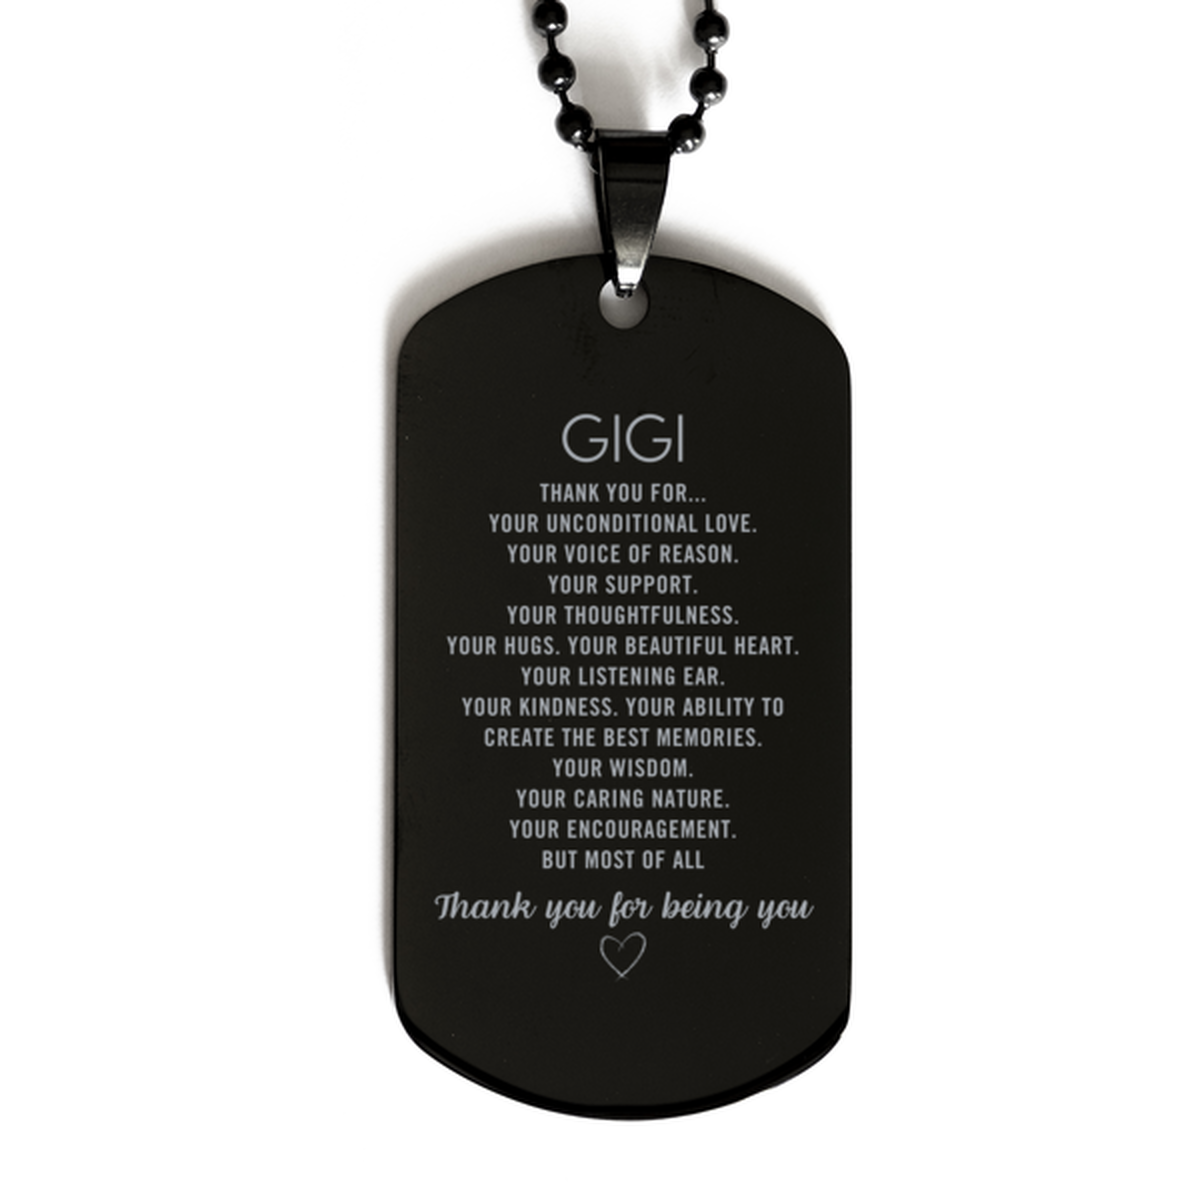 Gigi Black Dog Tag Custom, Engraved Gifts For Gigi Christmas Graduation Birthday Gifts for Men Women Gigi Thank you for Your unconditional love